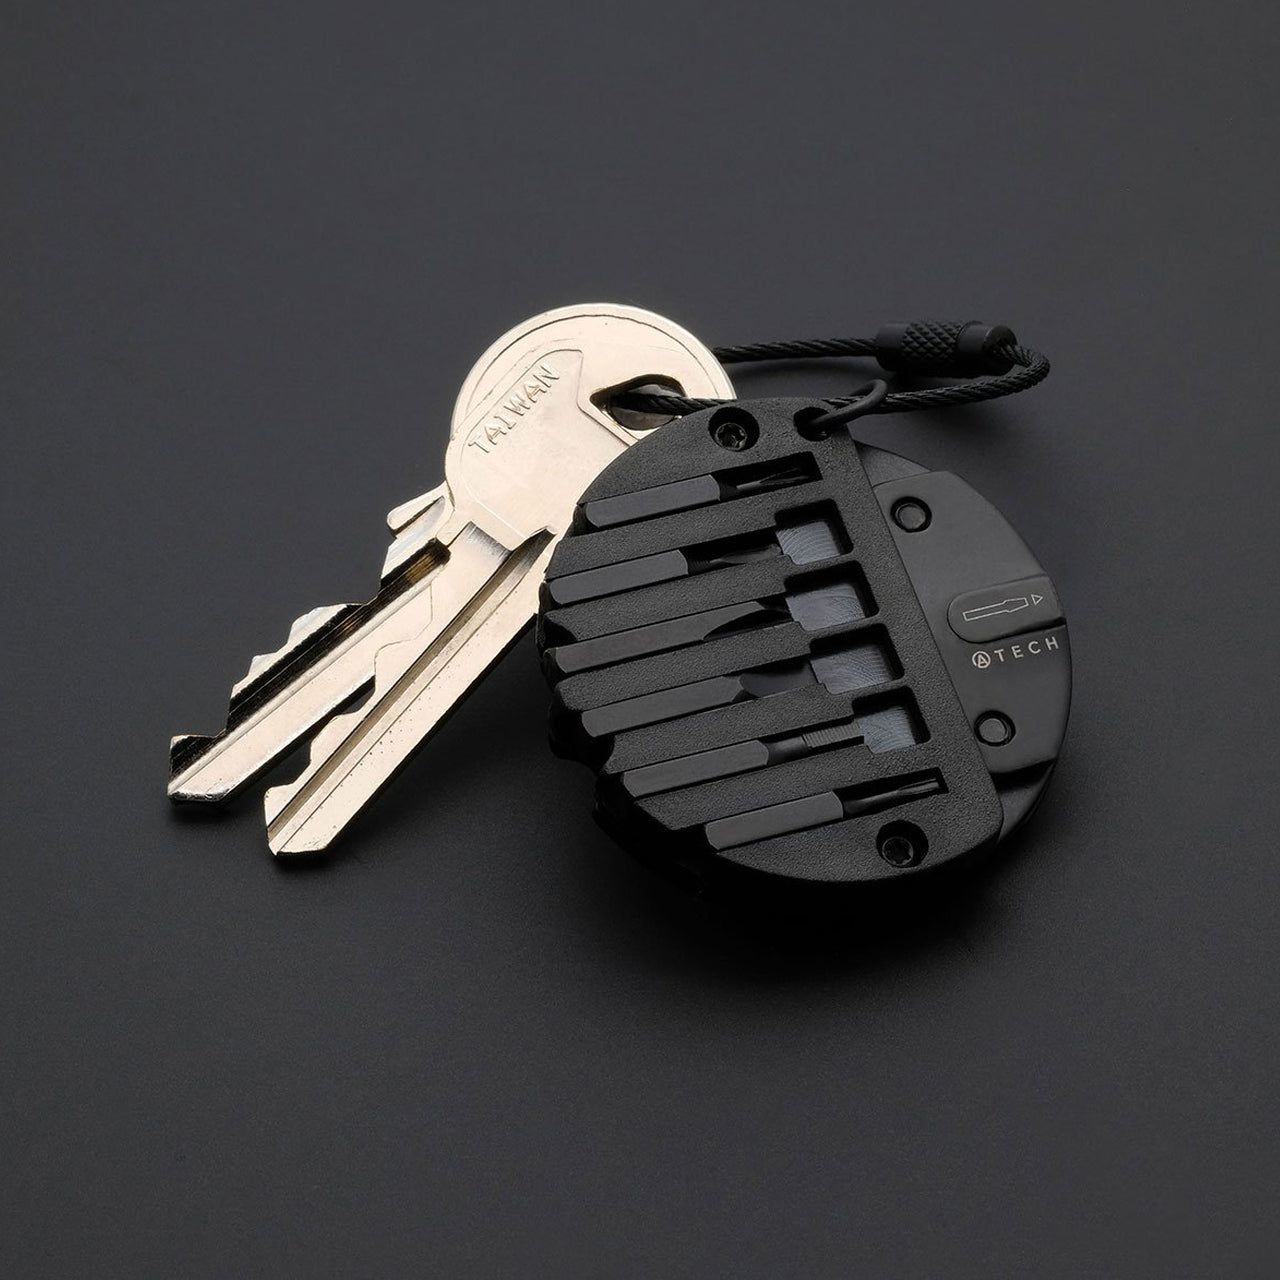 A-Tech Multi-Tool Keychain